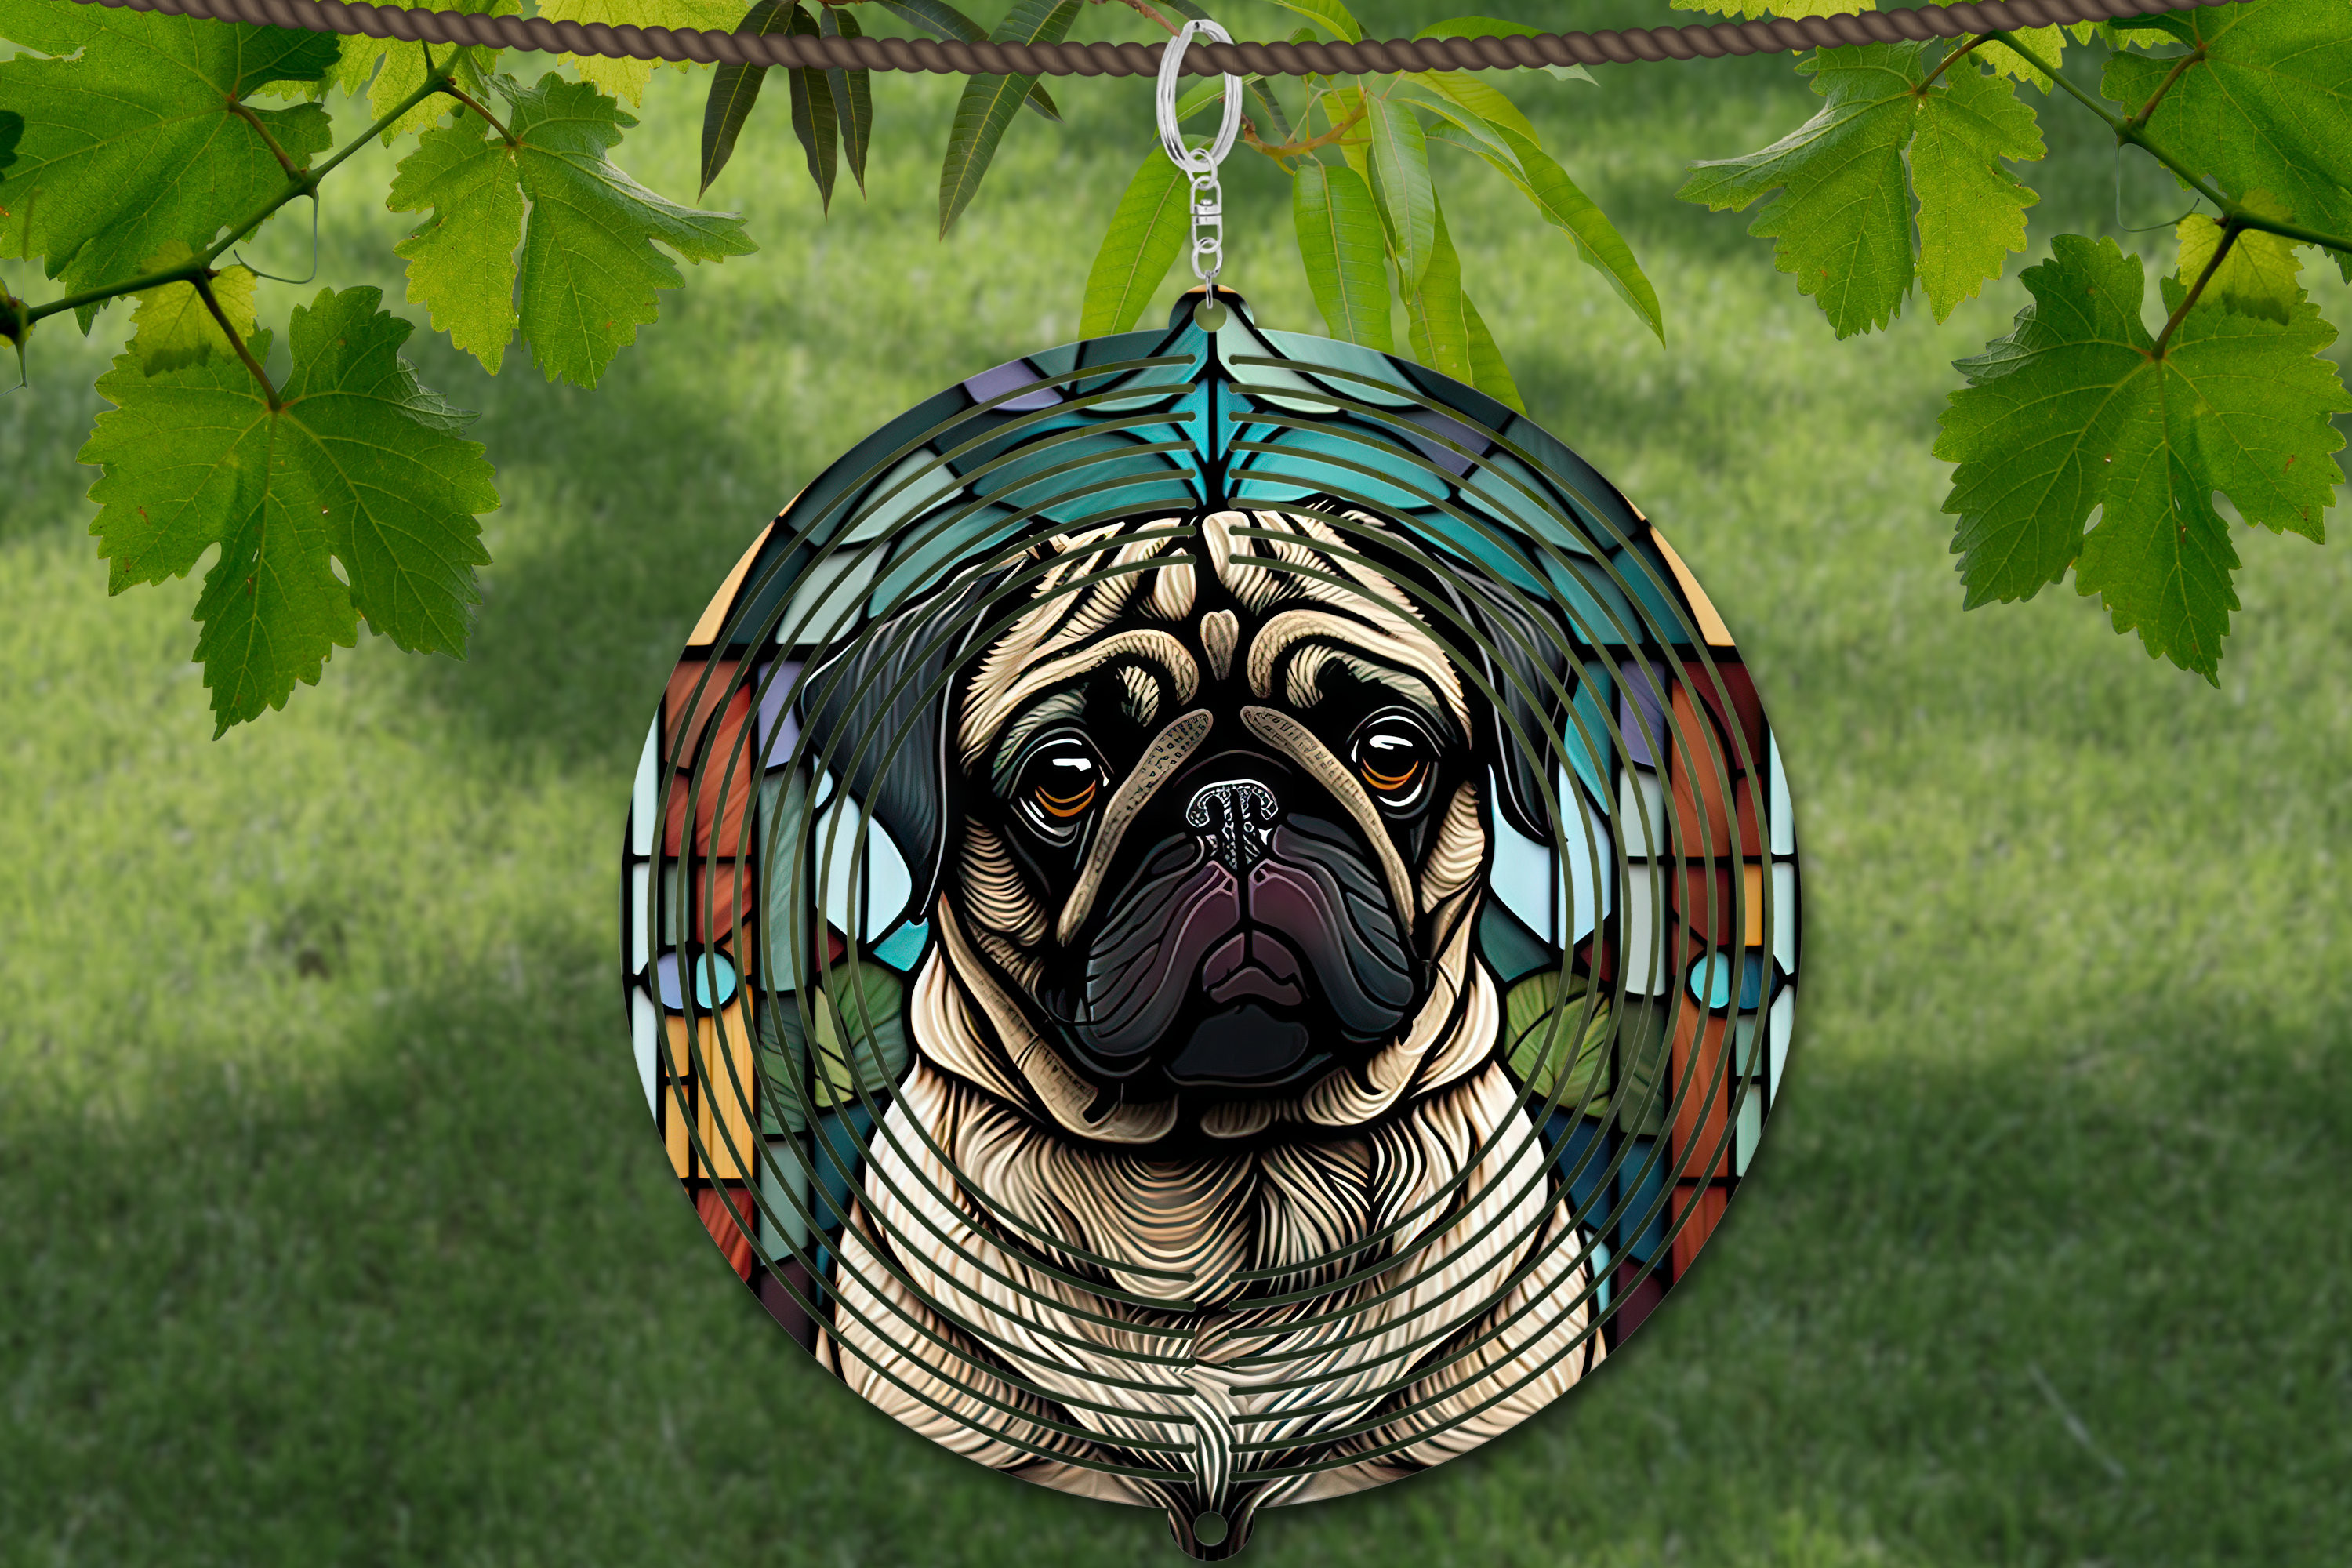 Pug Dog Wind Spinner For Yard And Garden, Outdoor Garden Yard Decoration, Garden Decor, Chime Art Gift